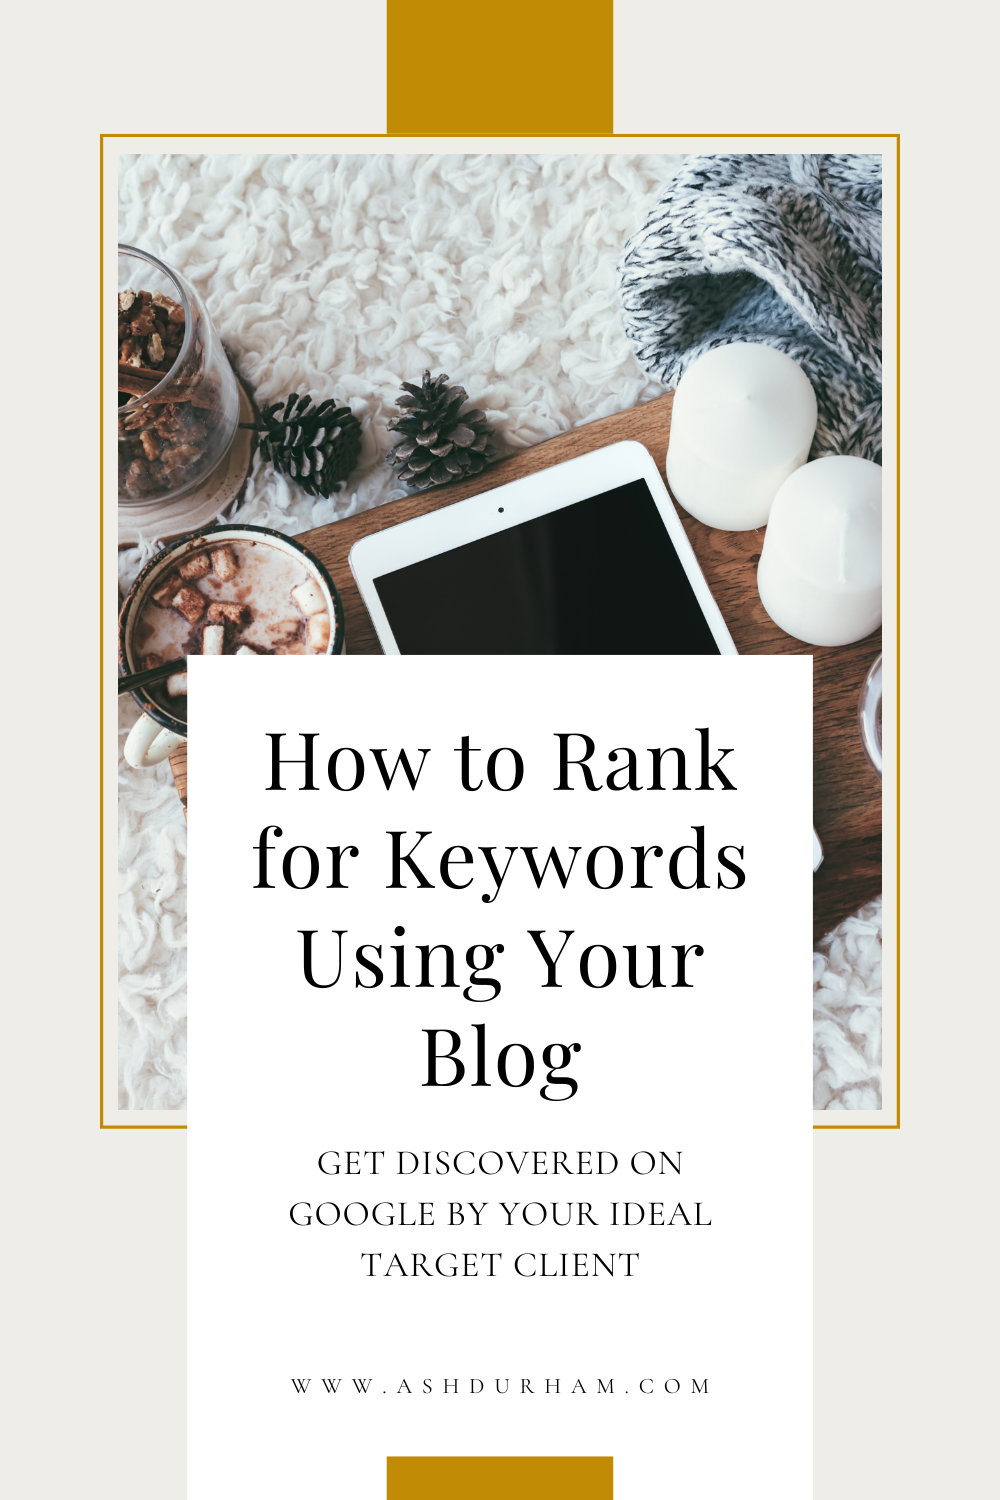 using keywords on your blog to rank on google